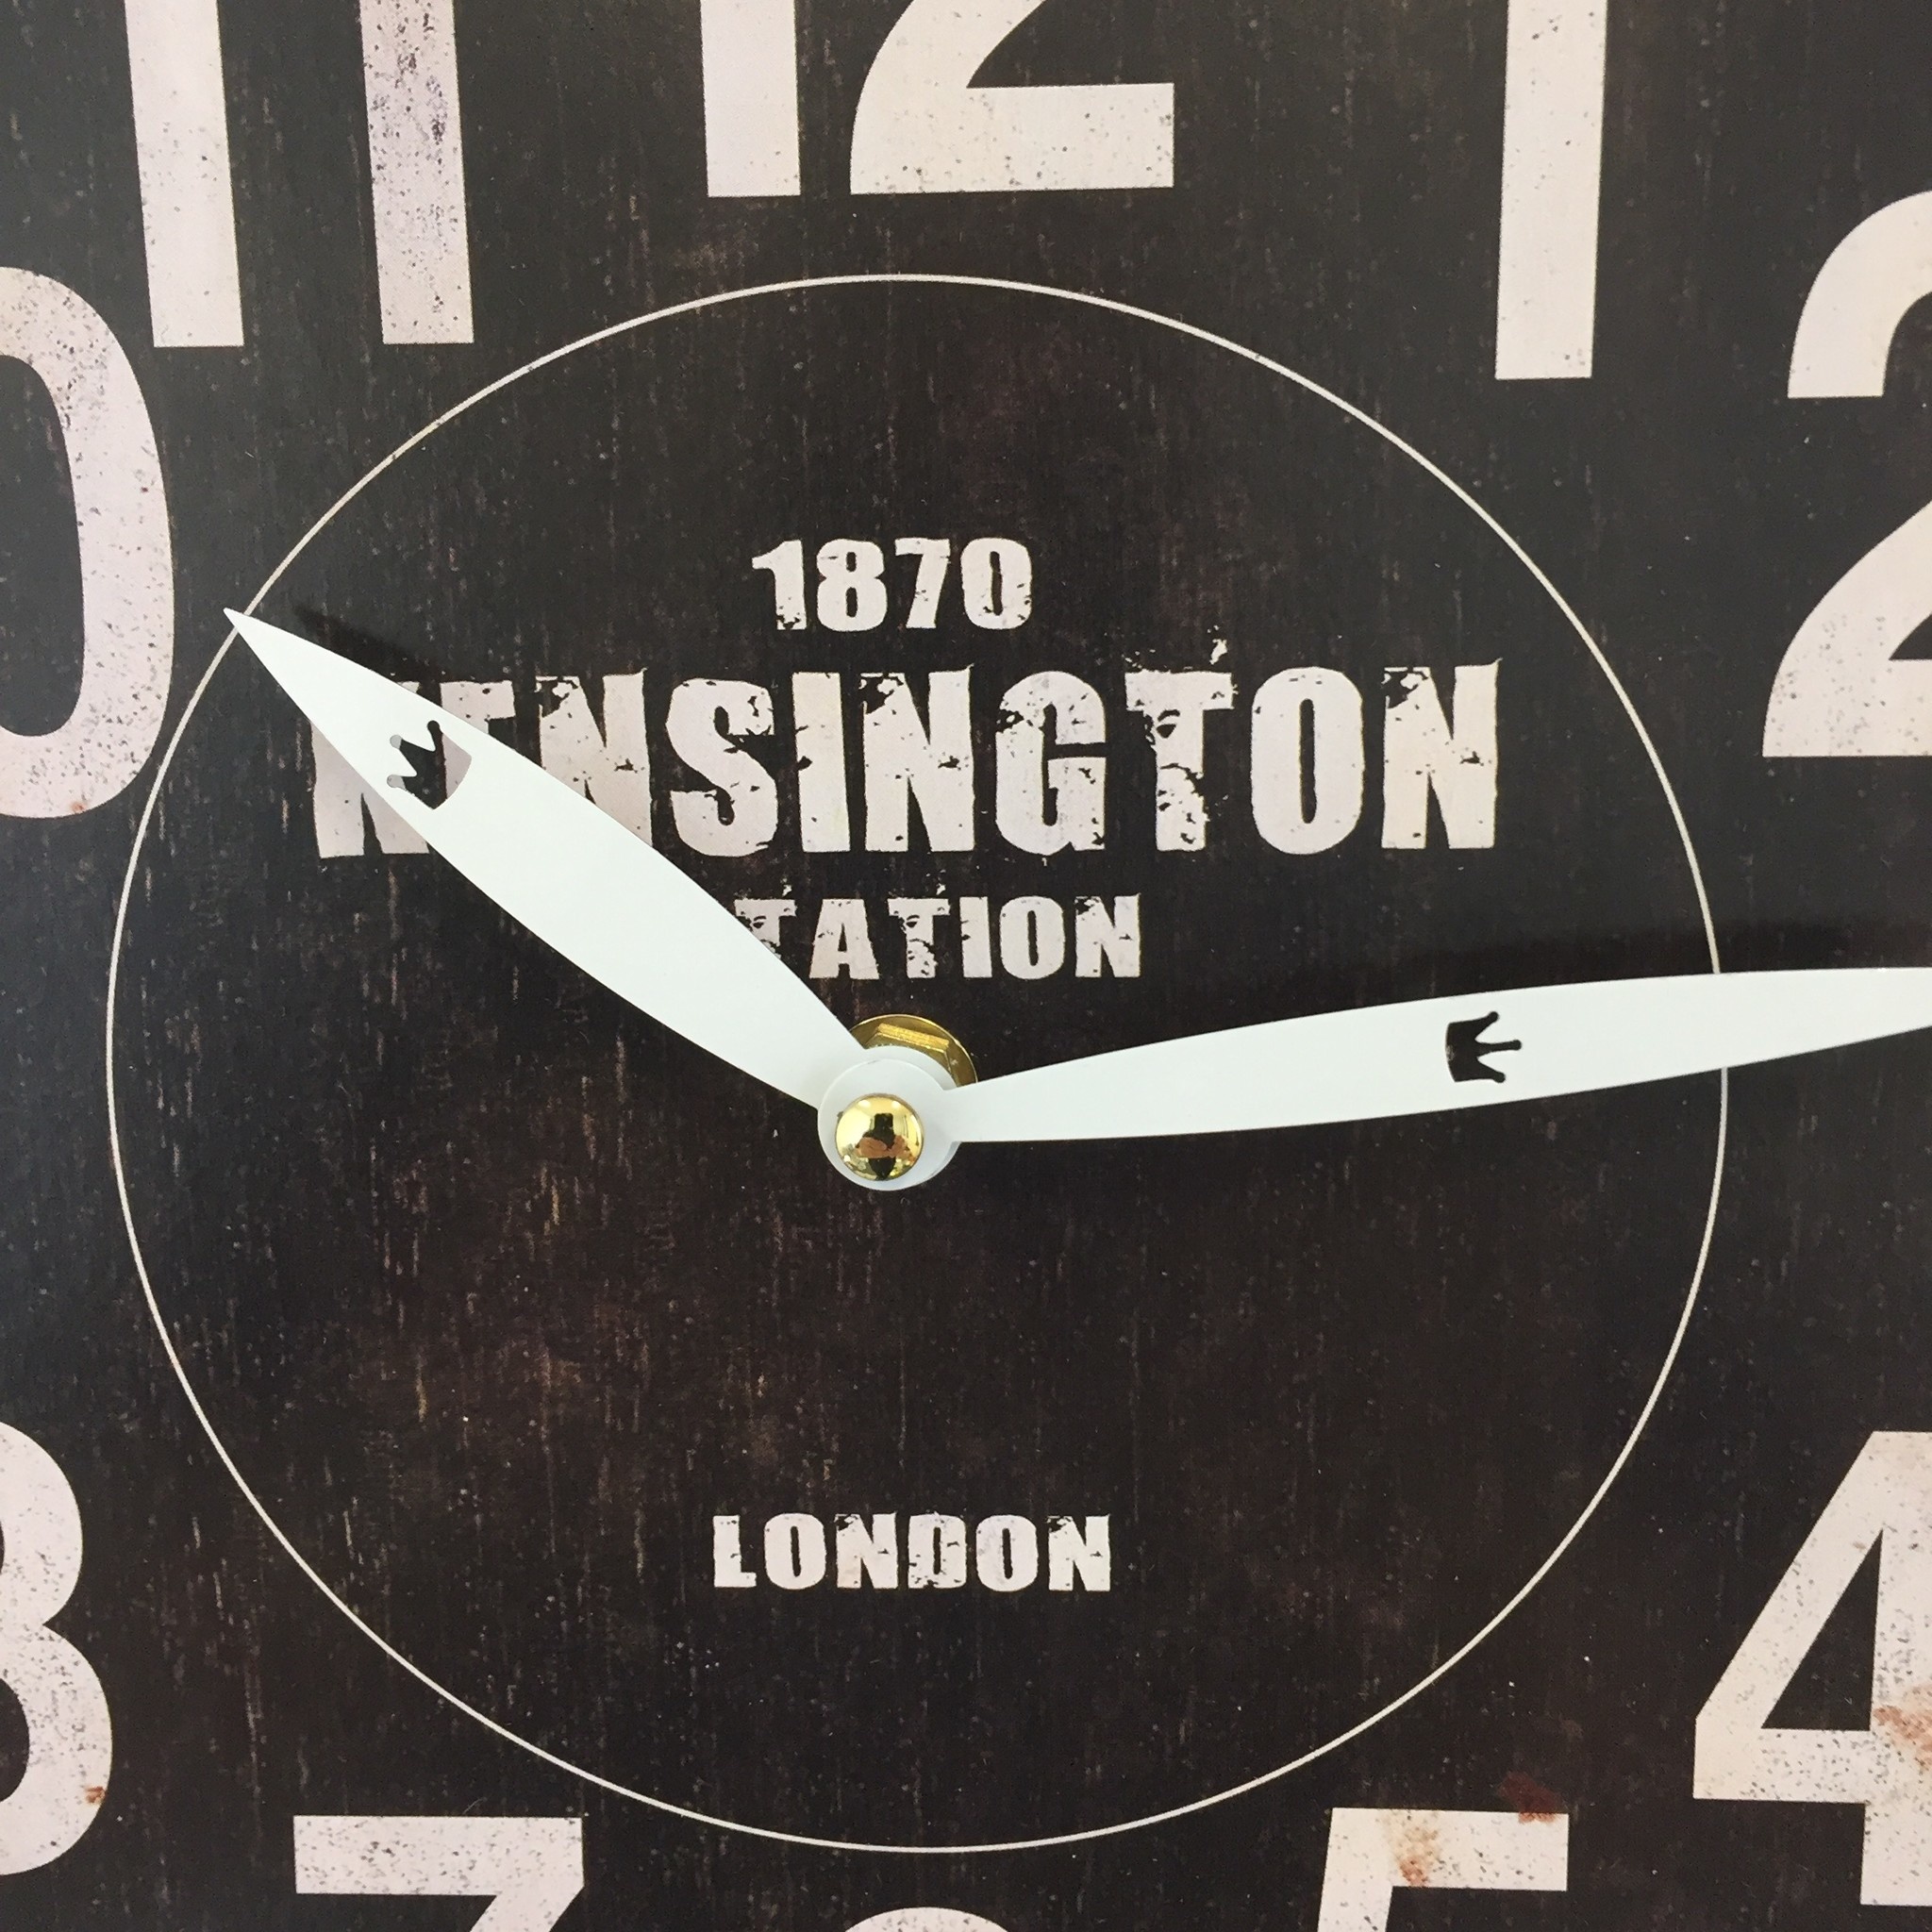 NiceTime Design - Wall clock Kensington 1870 Vintage